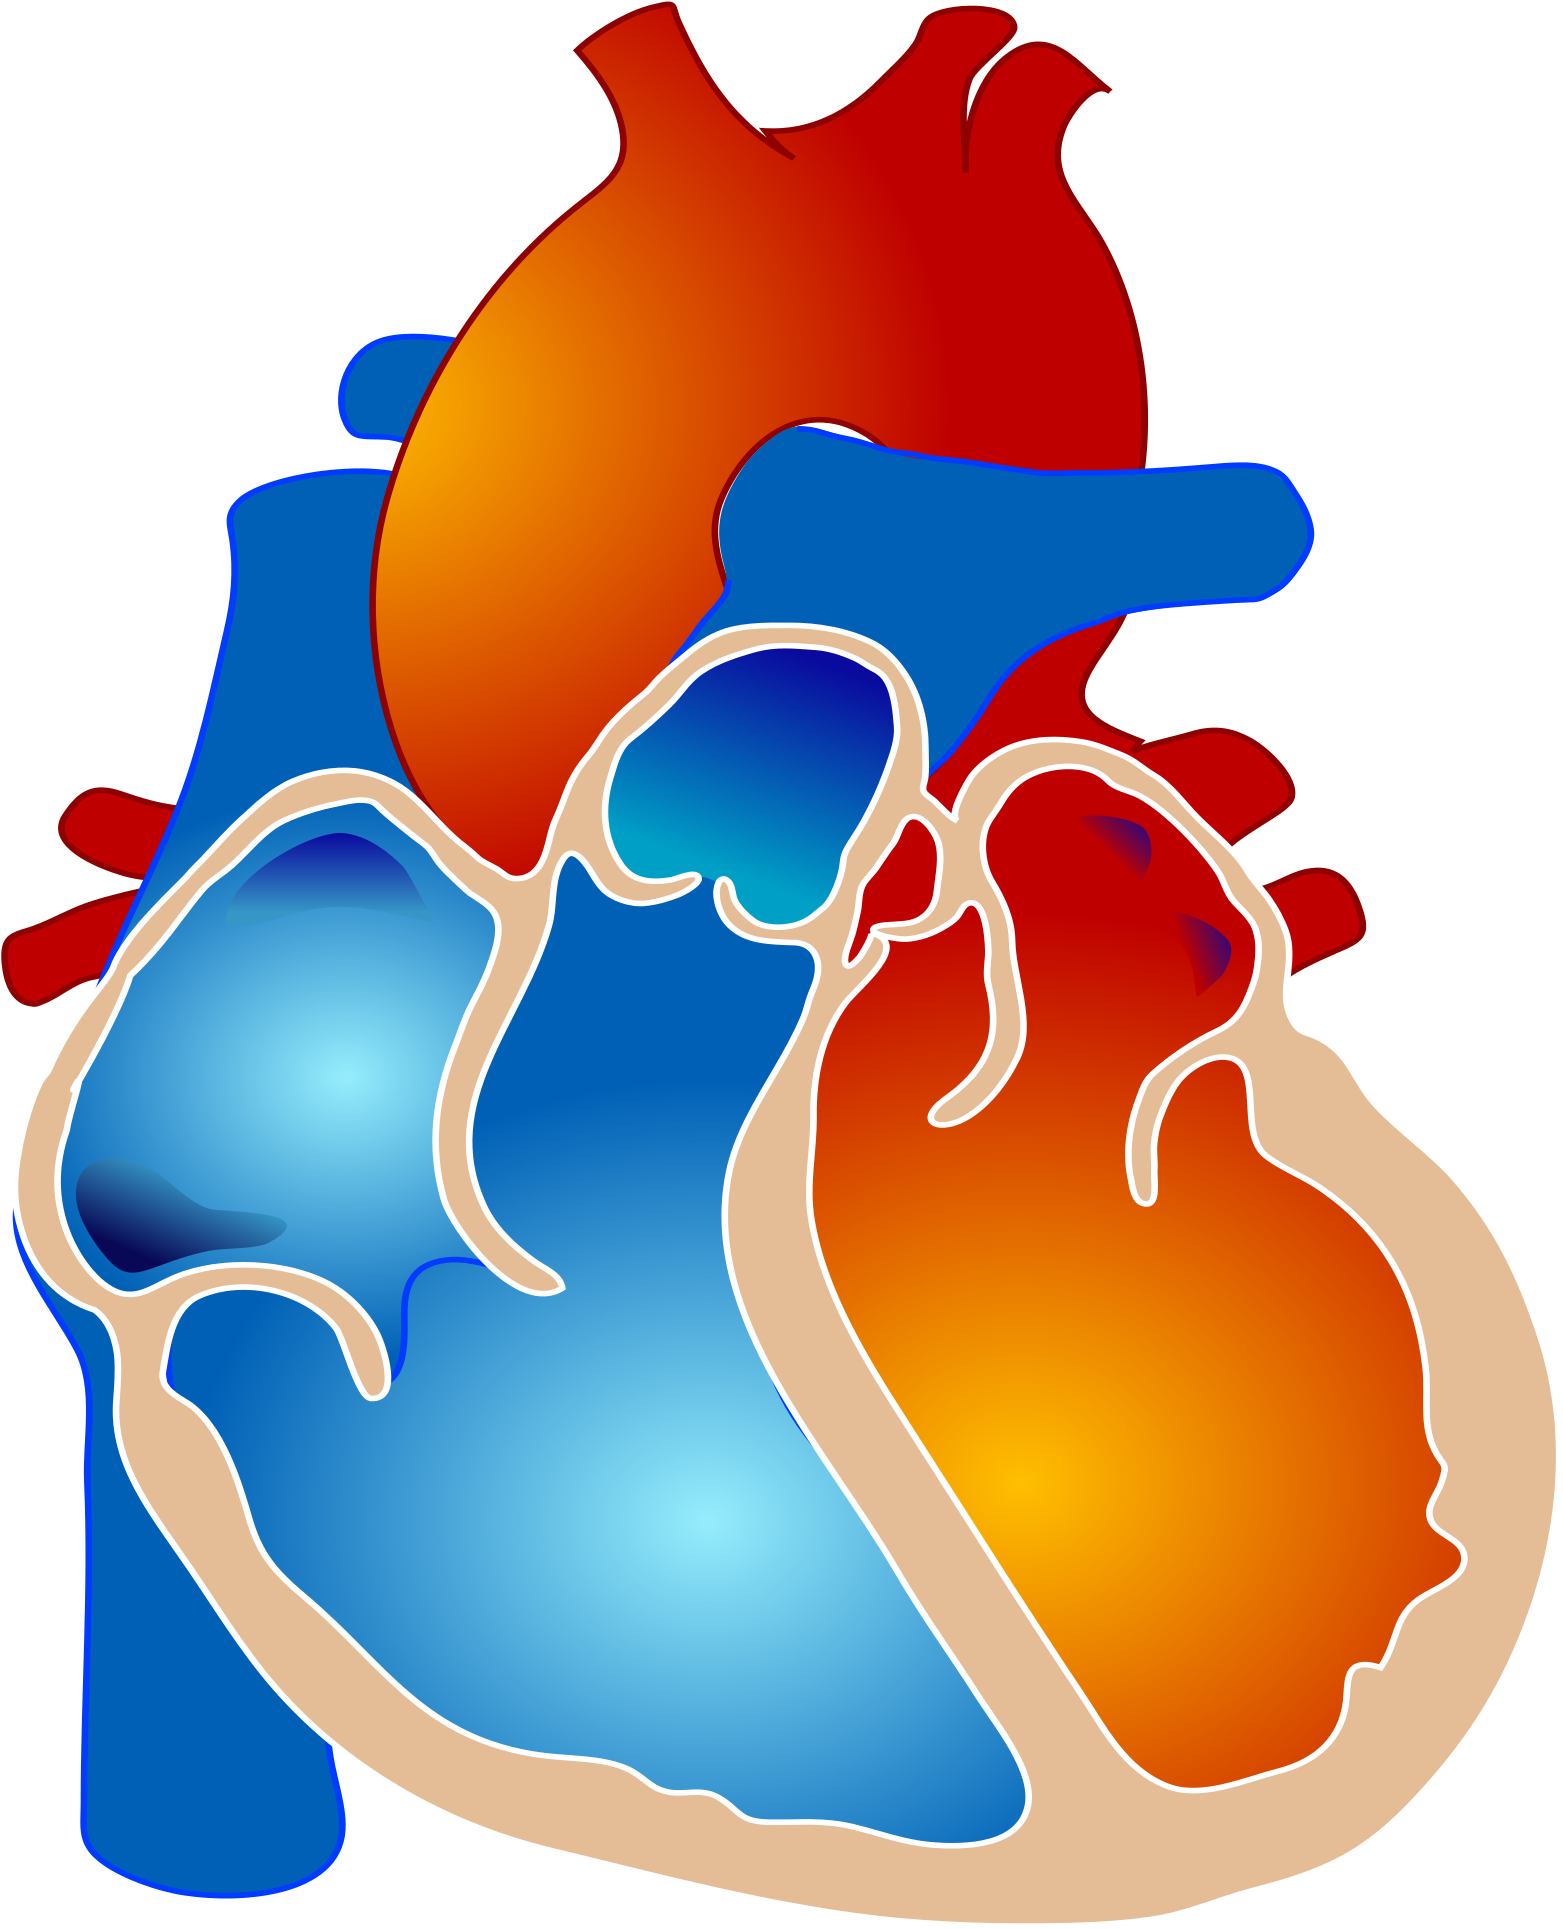 Healthy-heart - Healthy-heart (2000x2000)